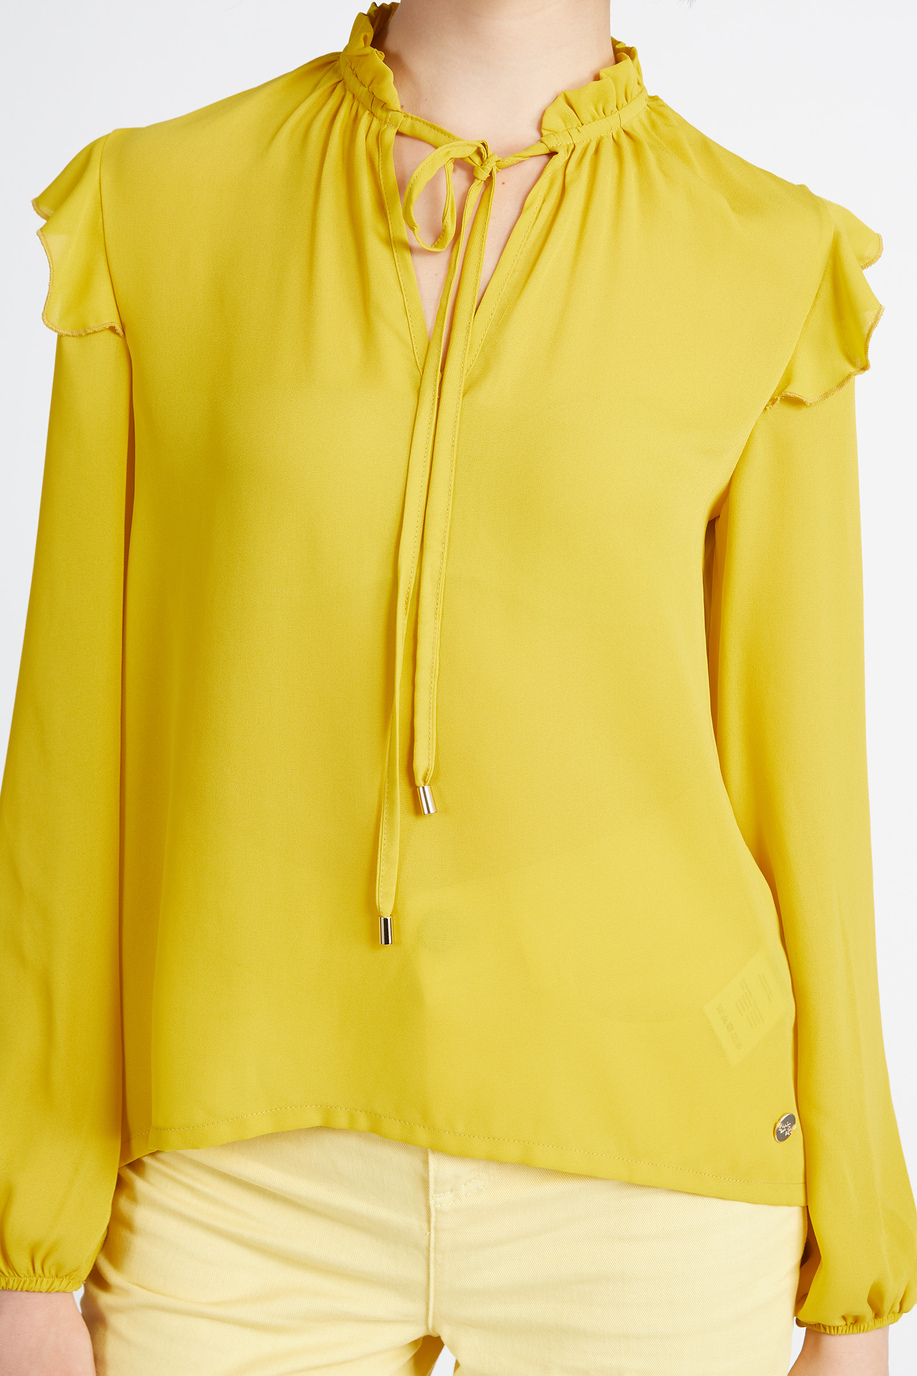 Einfarbiges Damen-Langarmshirt aus Georgette-Stoff Spring Weekend - Ville - Hemden | La Martina - Official Online Shop